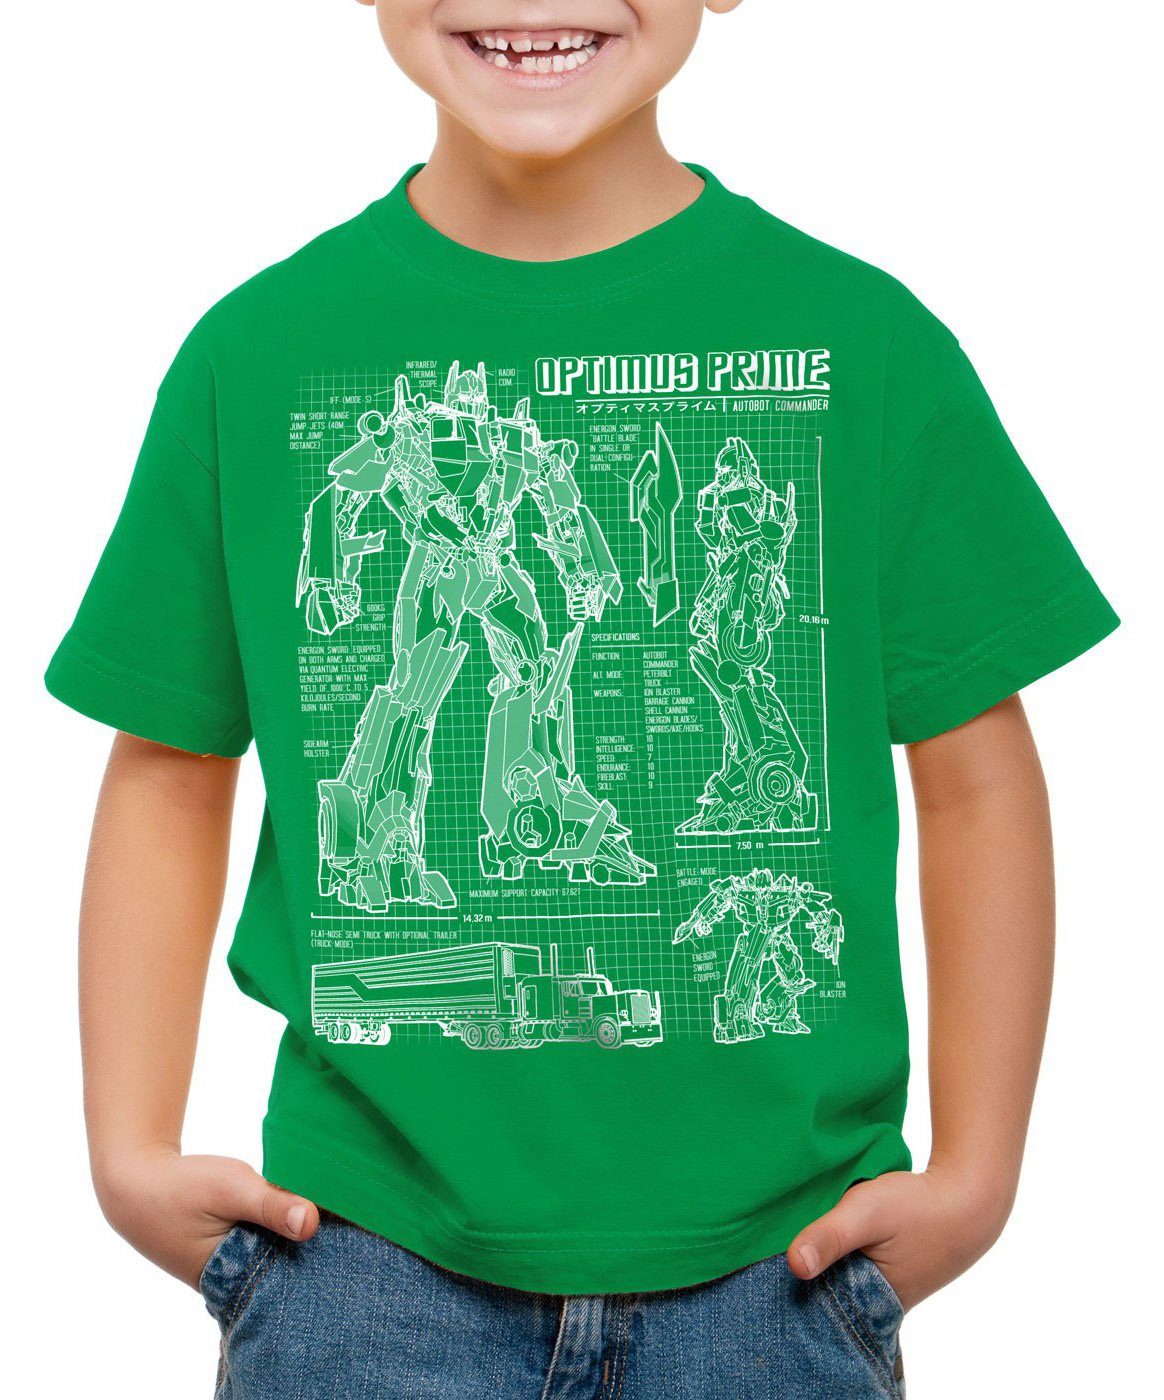 style3 Print-Shirt grün Kinder blaupause T-Shirt Optimus Prime autobot